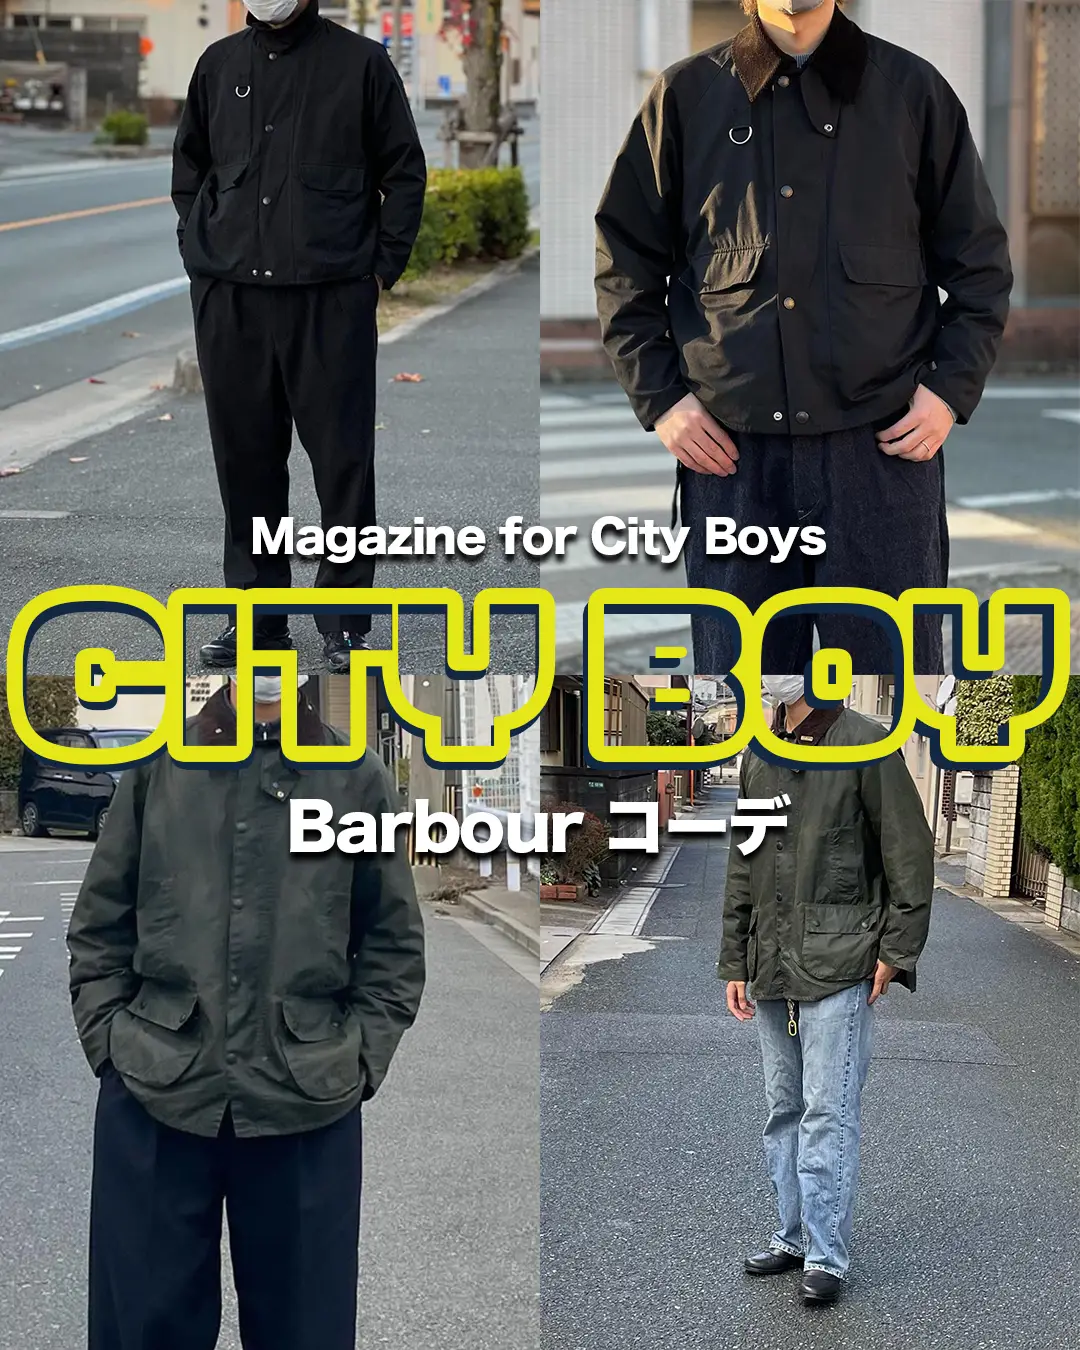 CITYBOY バブアーコーデ | メゾン七つ道具 |ファッションが投稿した